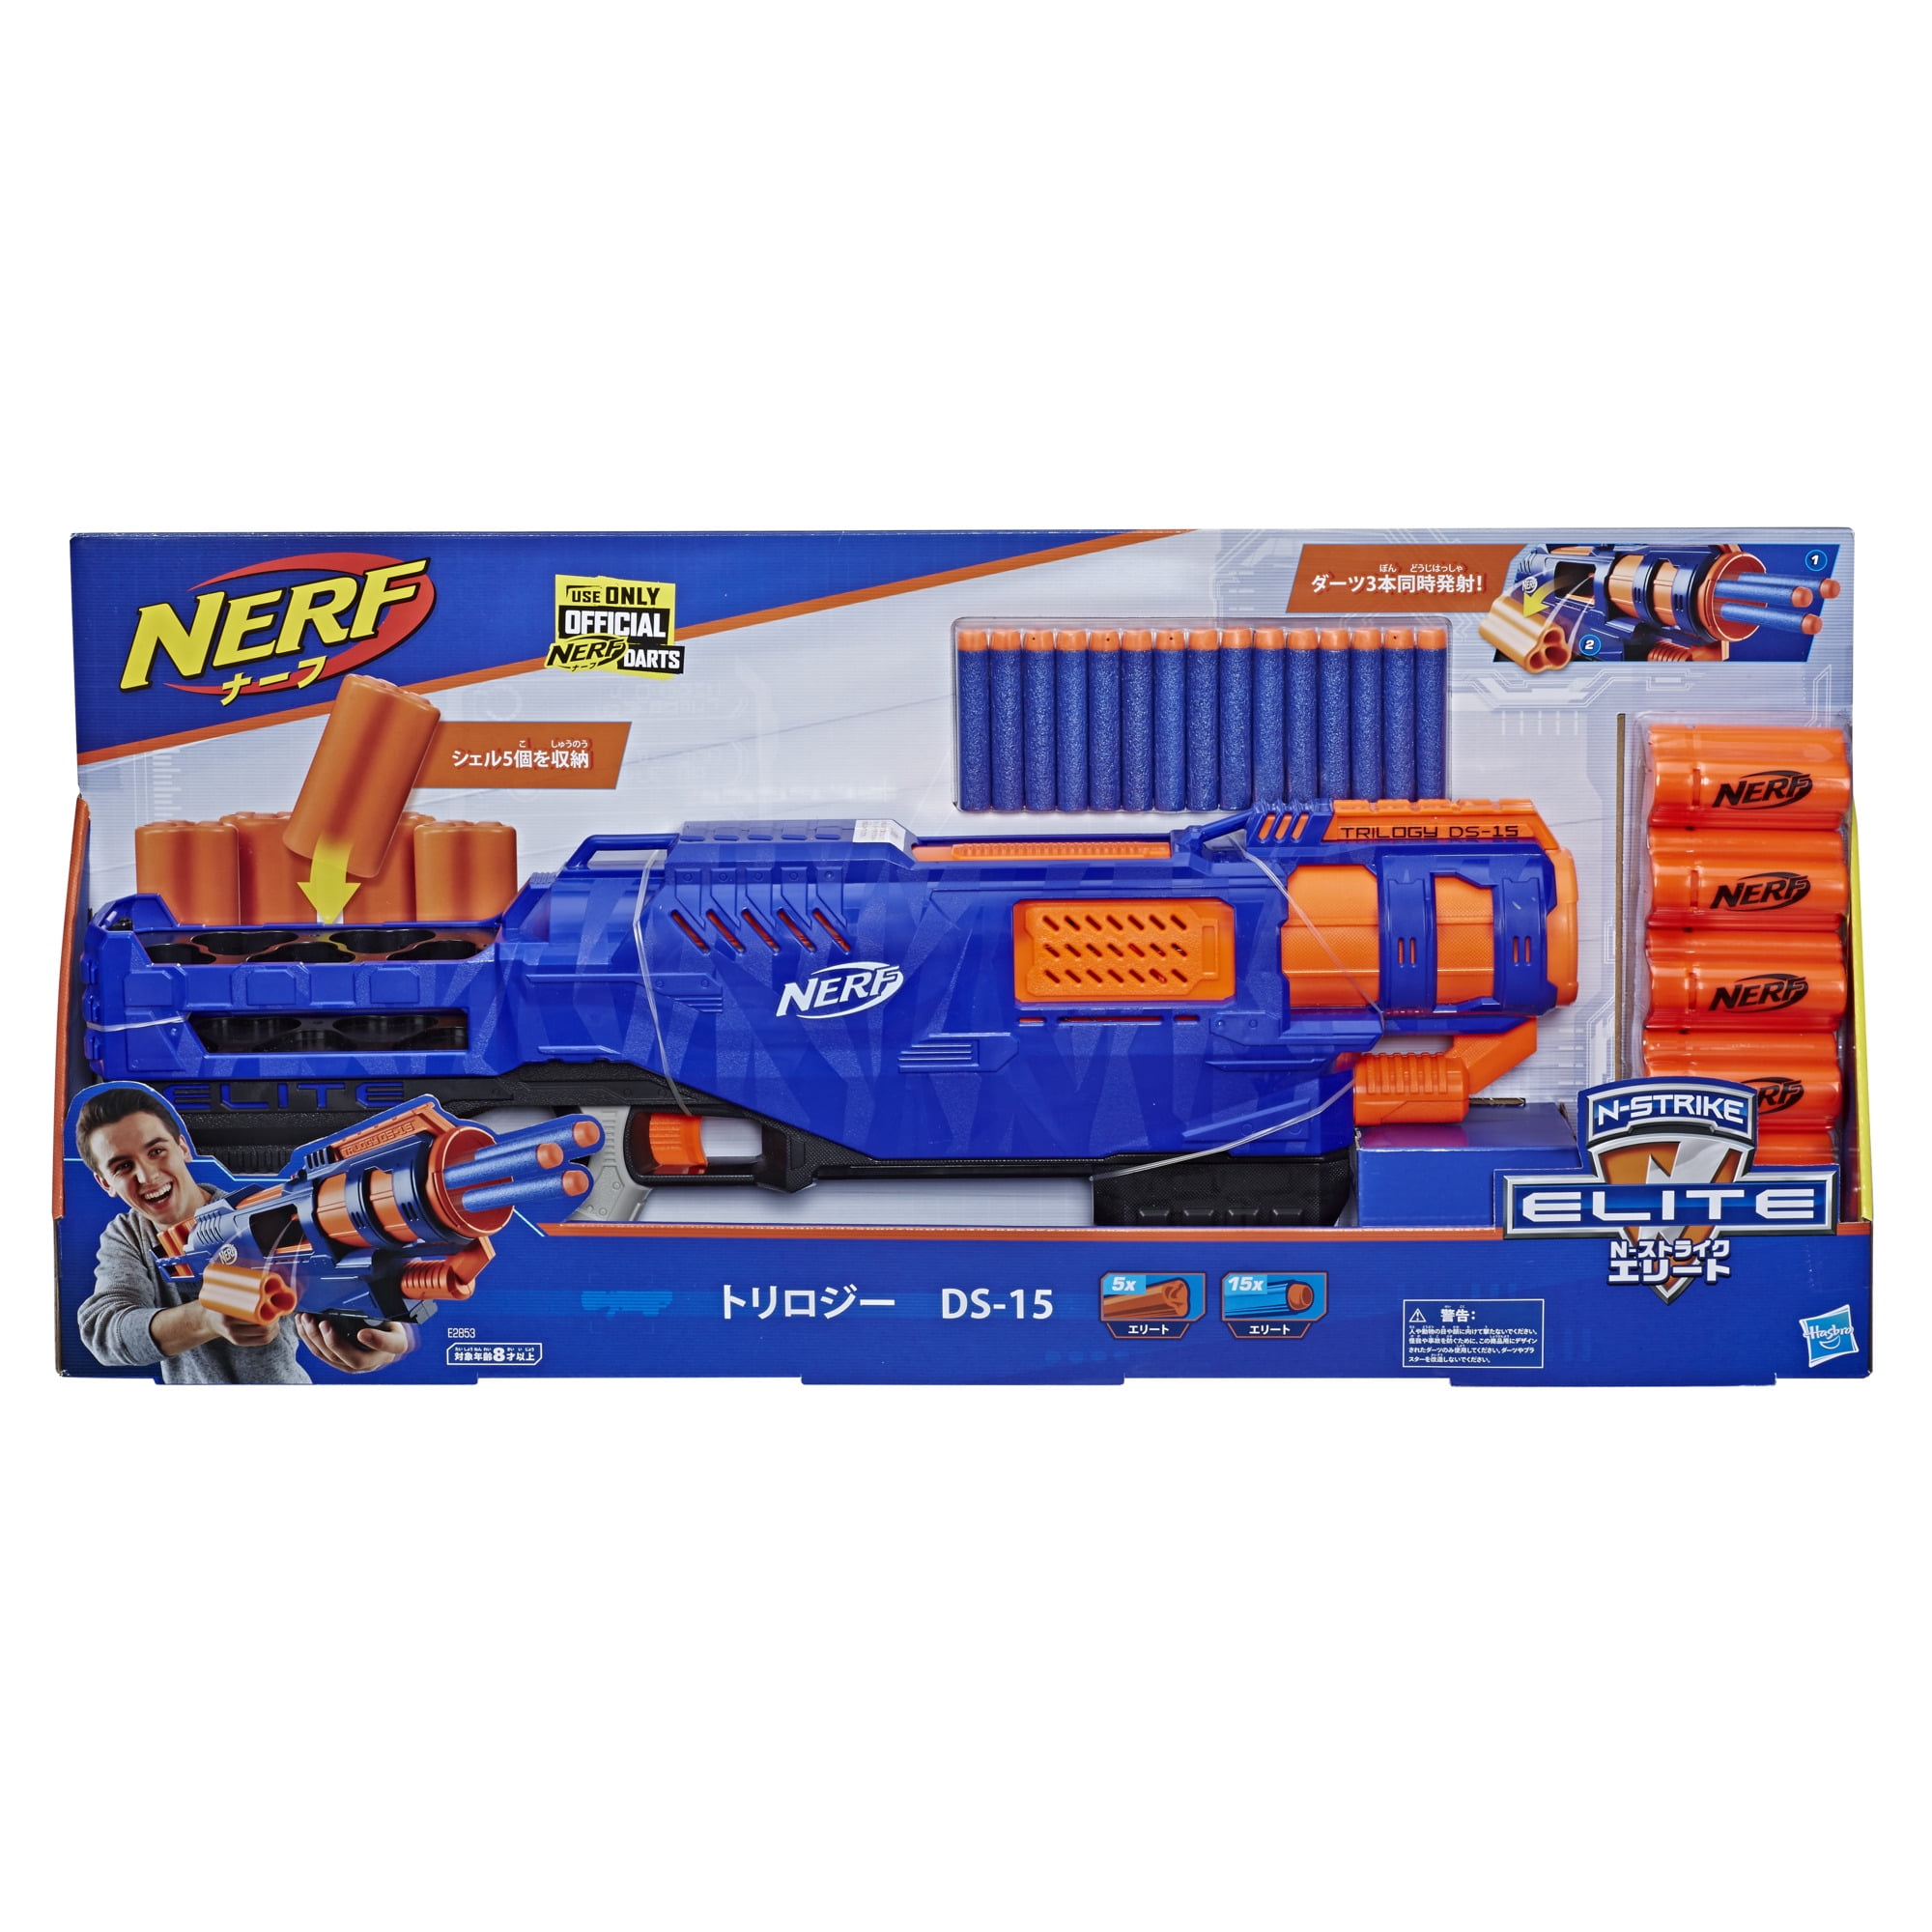 Nerf N Strike Elite Disruptor Darts Gun Toy Blaster Kids Outdoor Play Gift New 